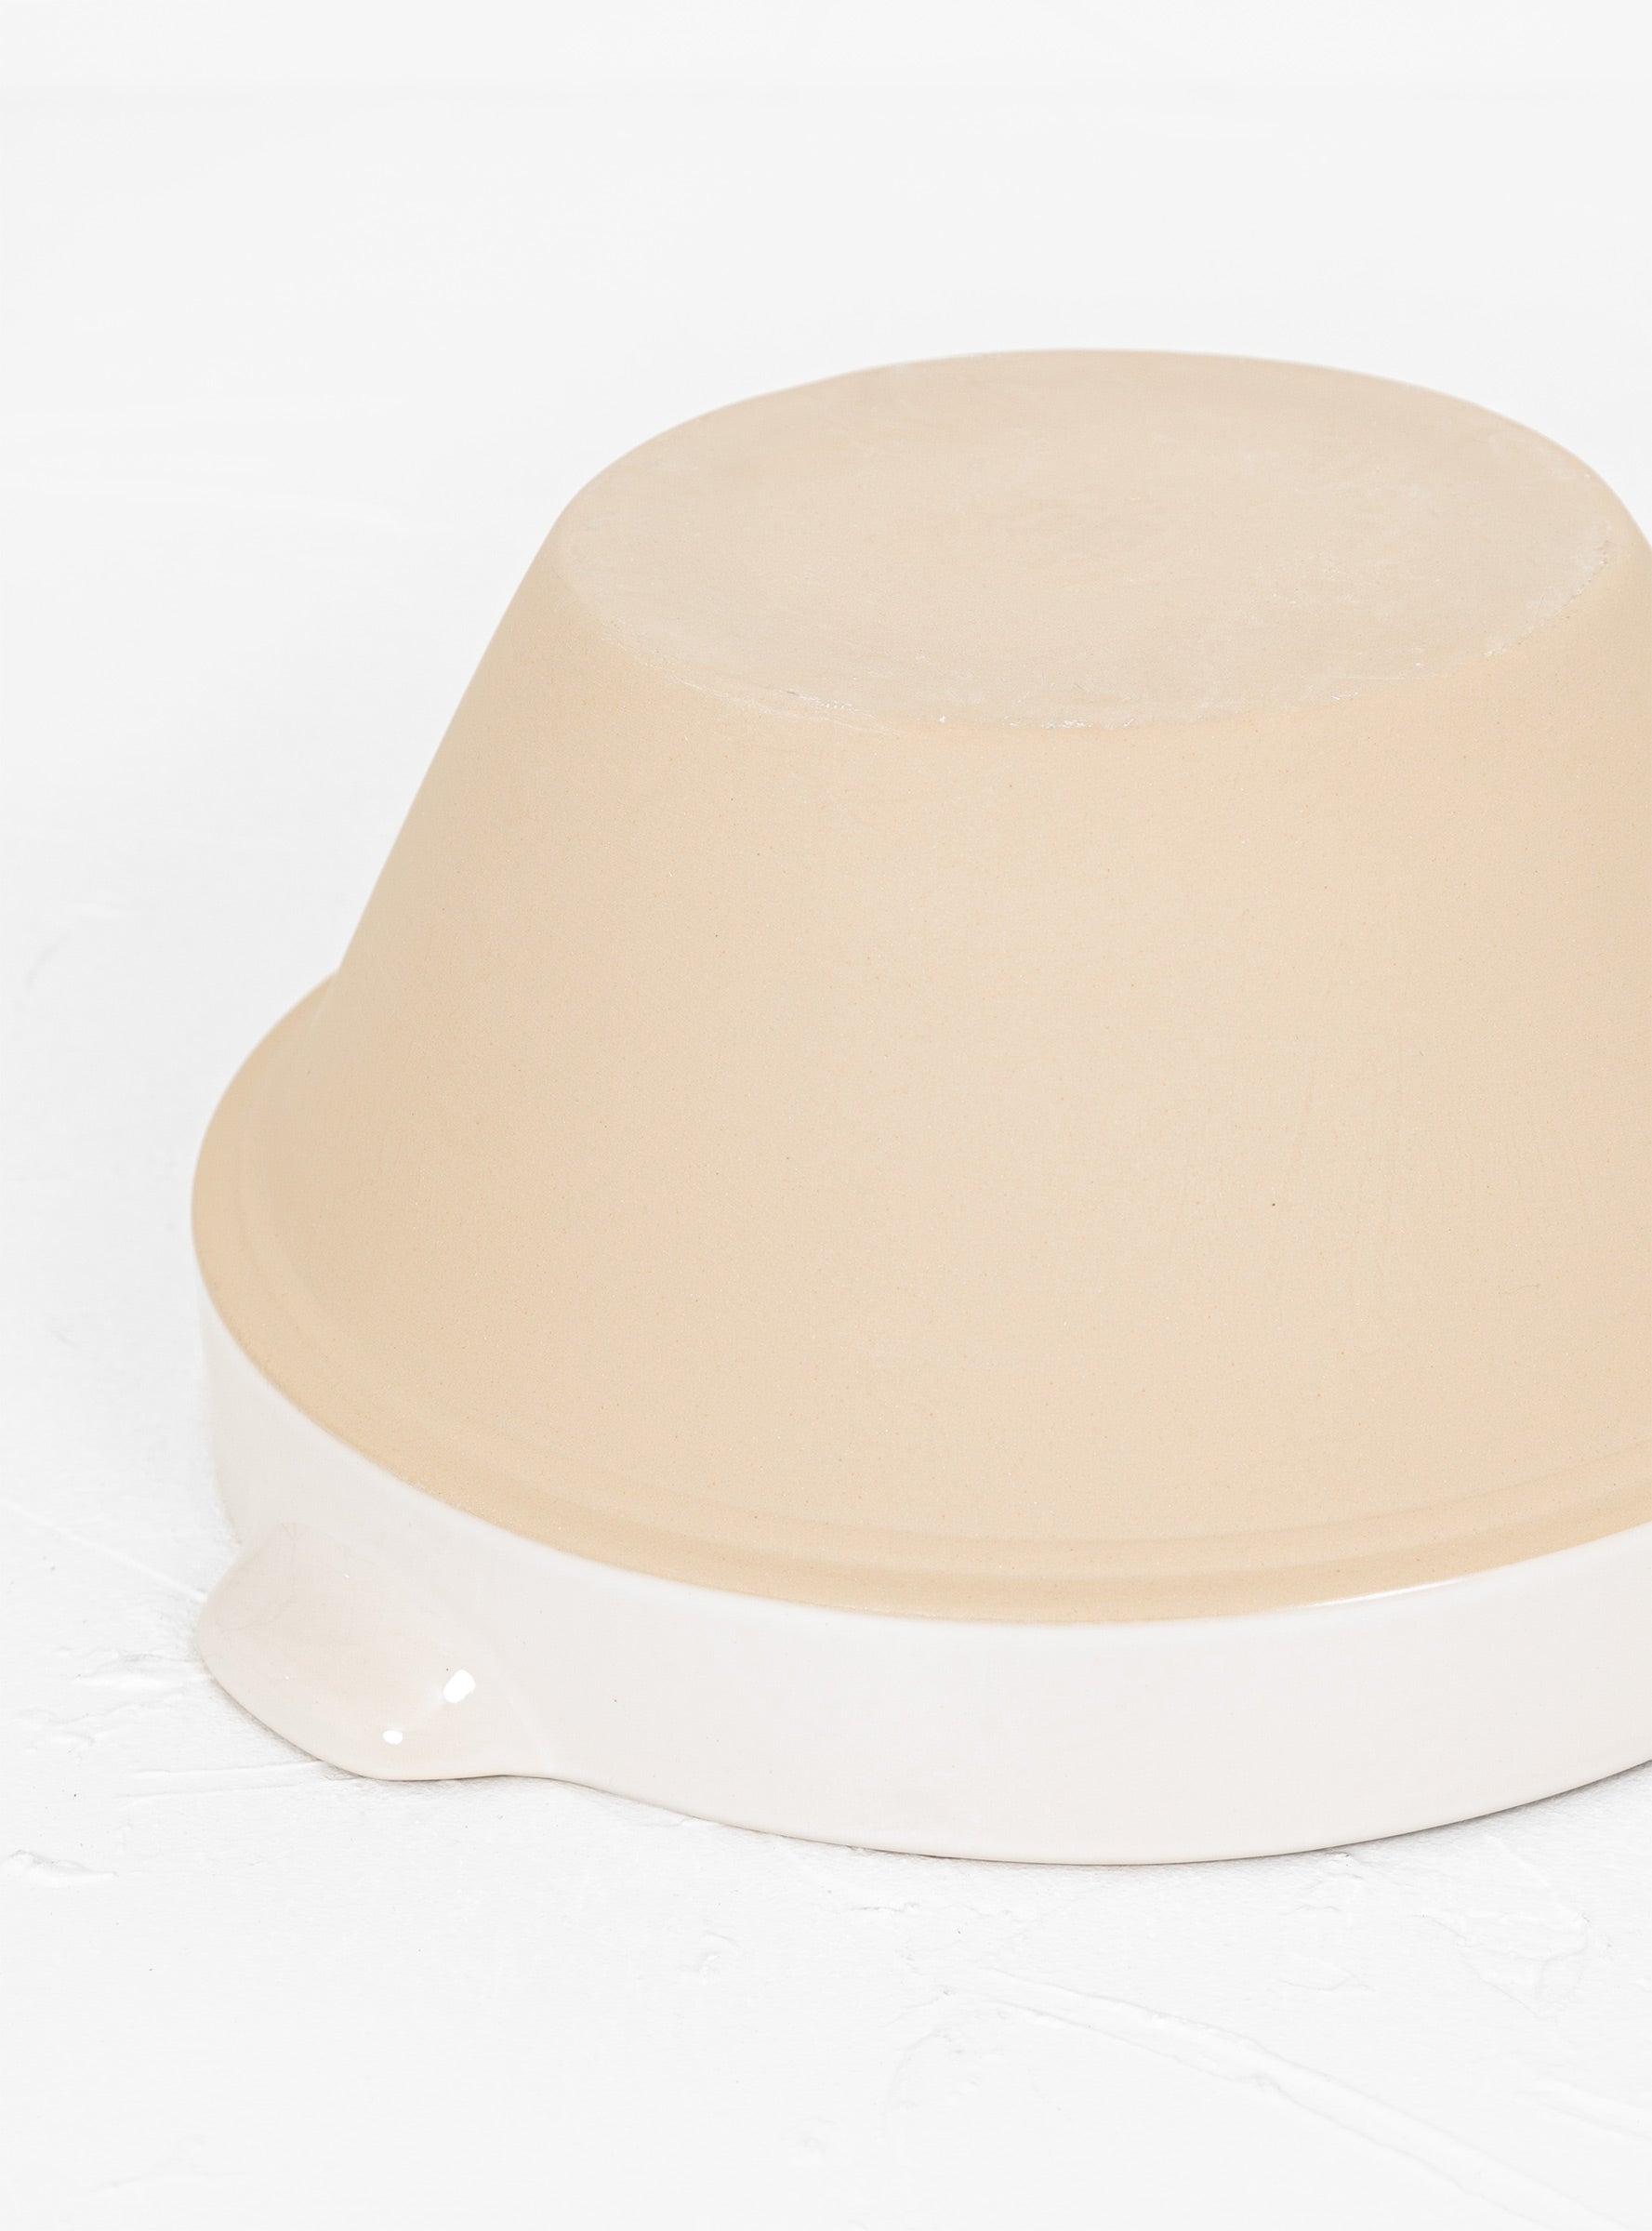  Manufacture de Digoin Bowl With Lip No. 8 White & Natural